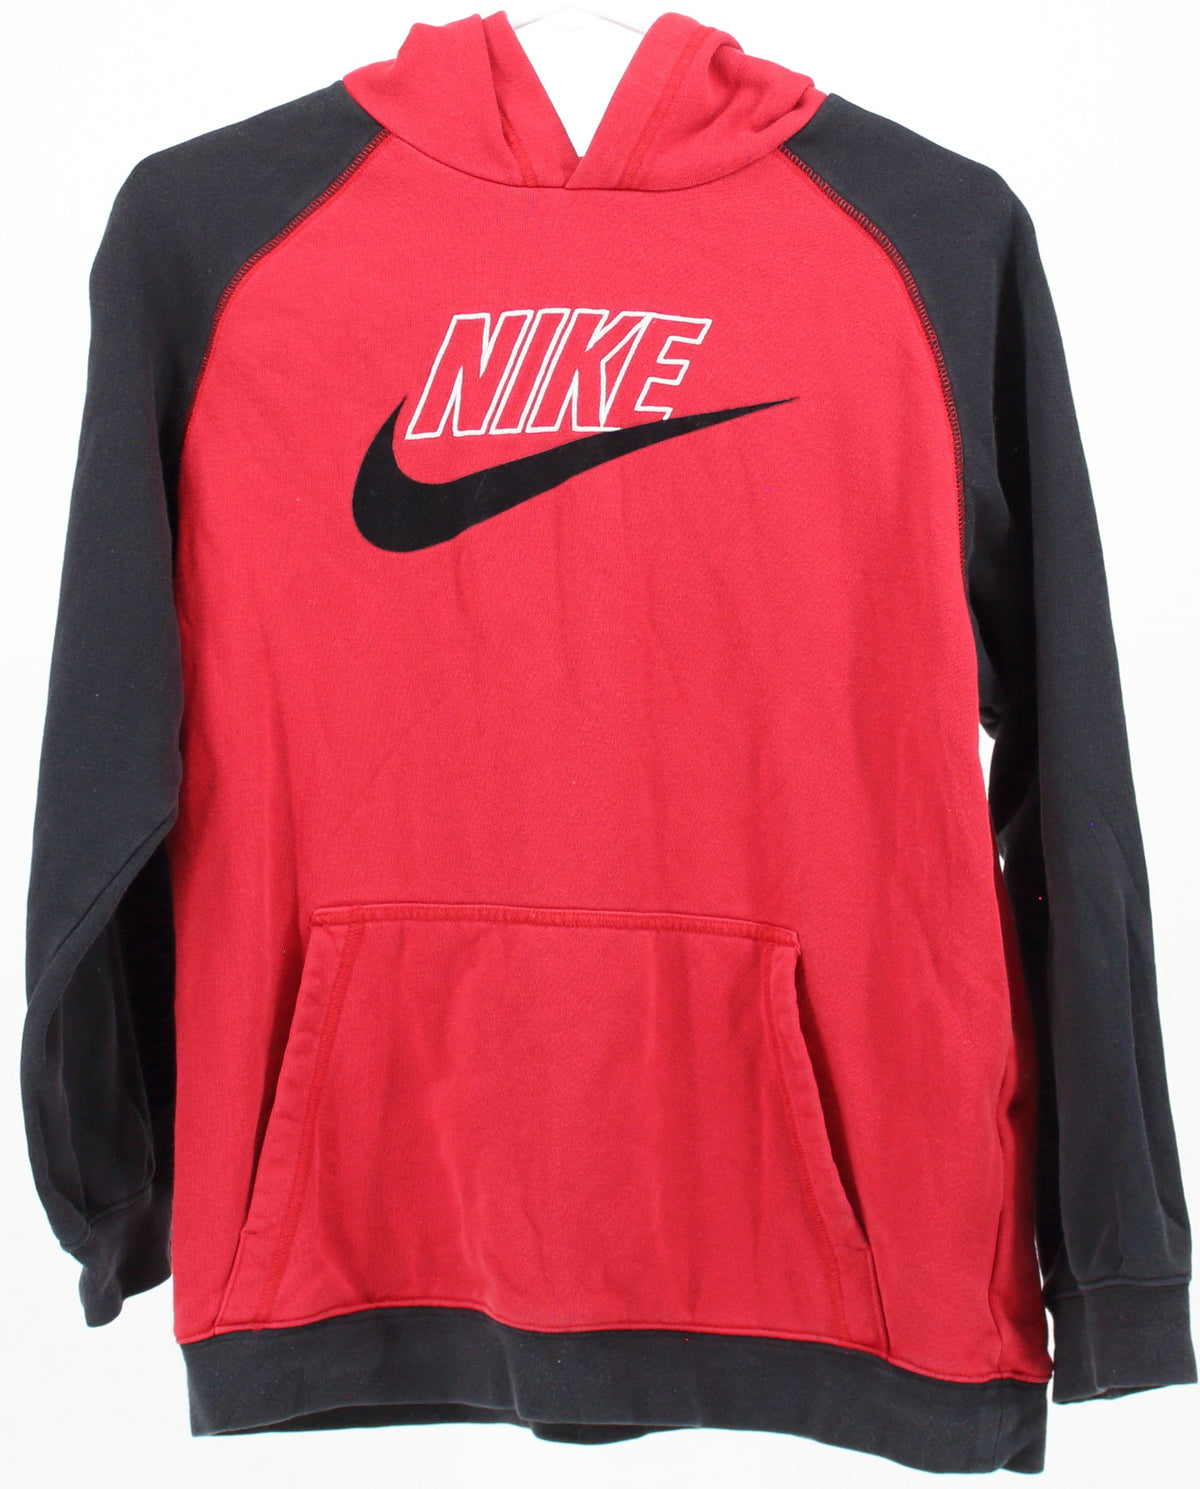 Nike Logo Flocked Silk Red and Black Sweater